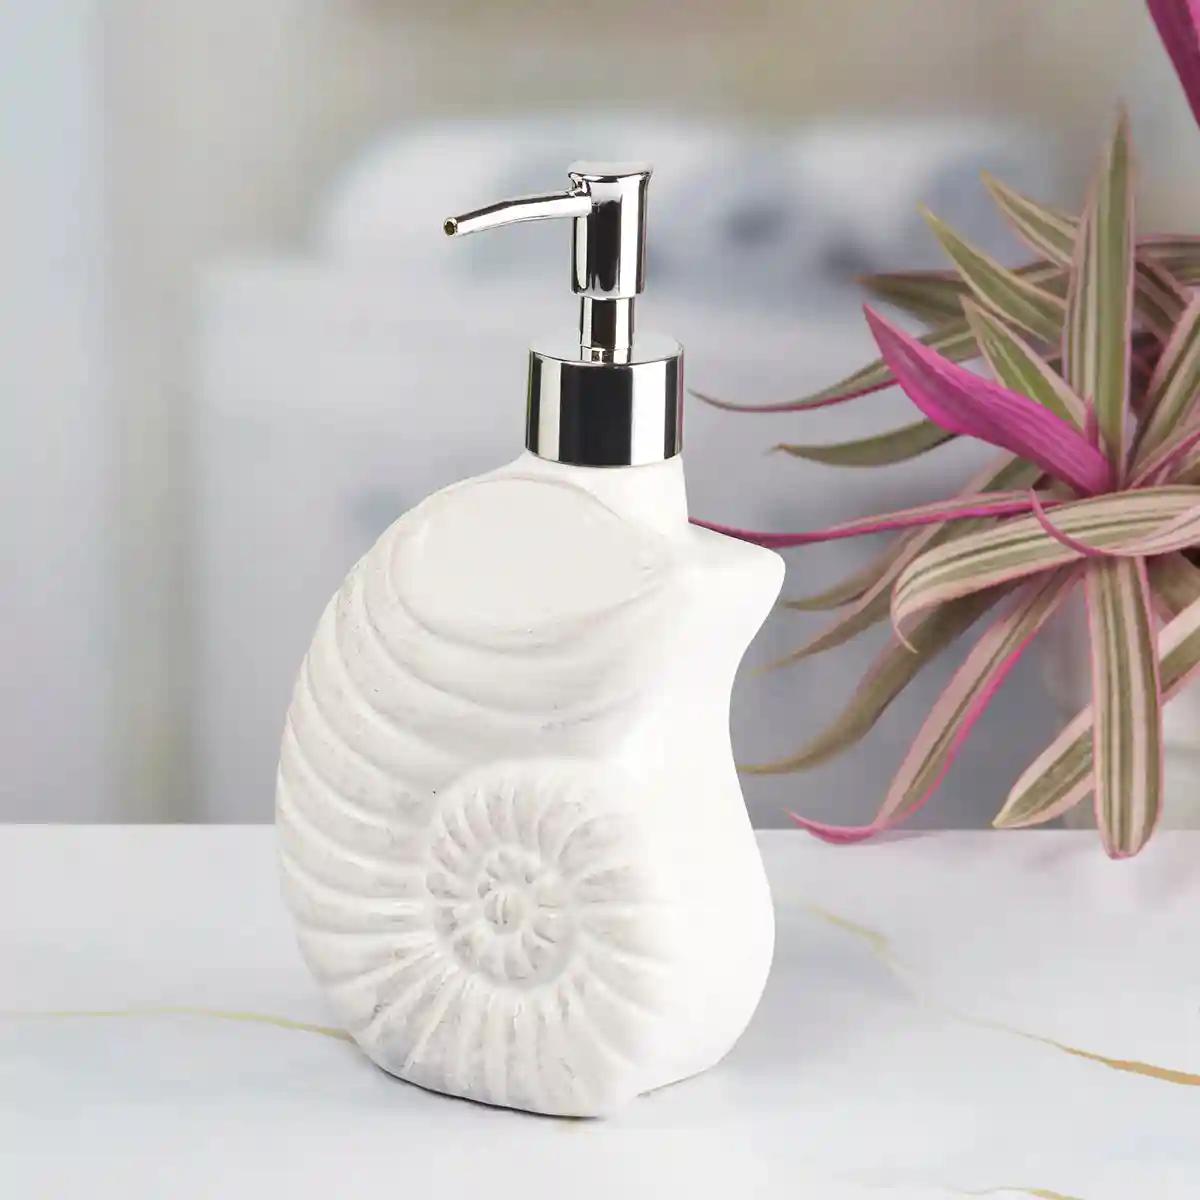 Kookee Ceramic Soap Dispenser for Bathroom handwash, refillable pump bottle for Kitchen hand wash basin, Set of 2 - White (7964)